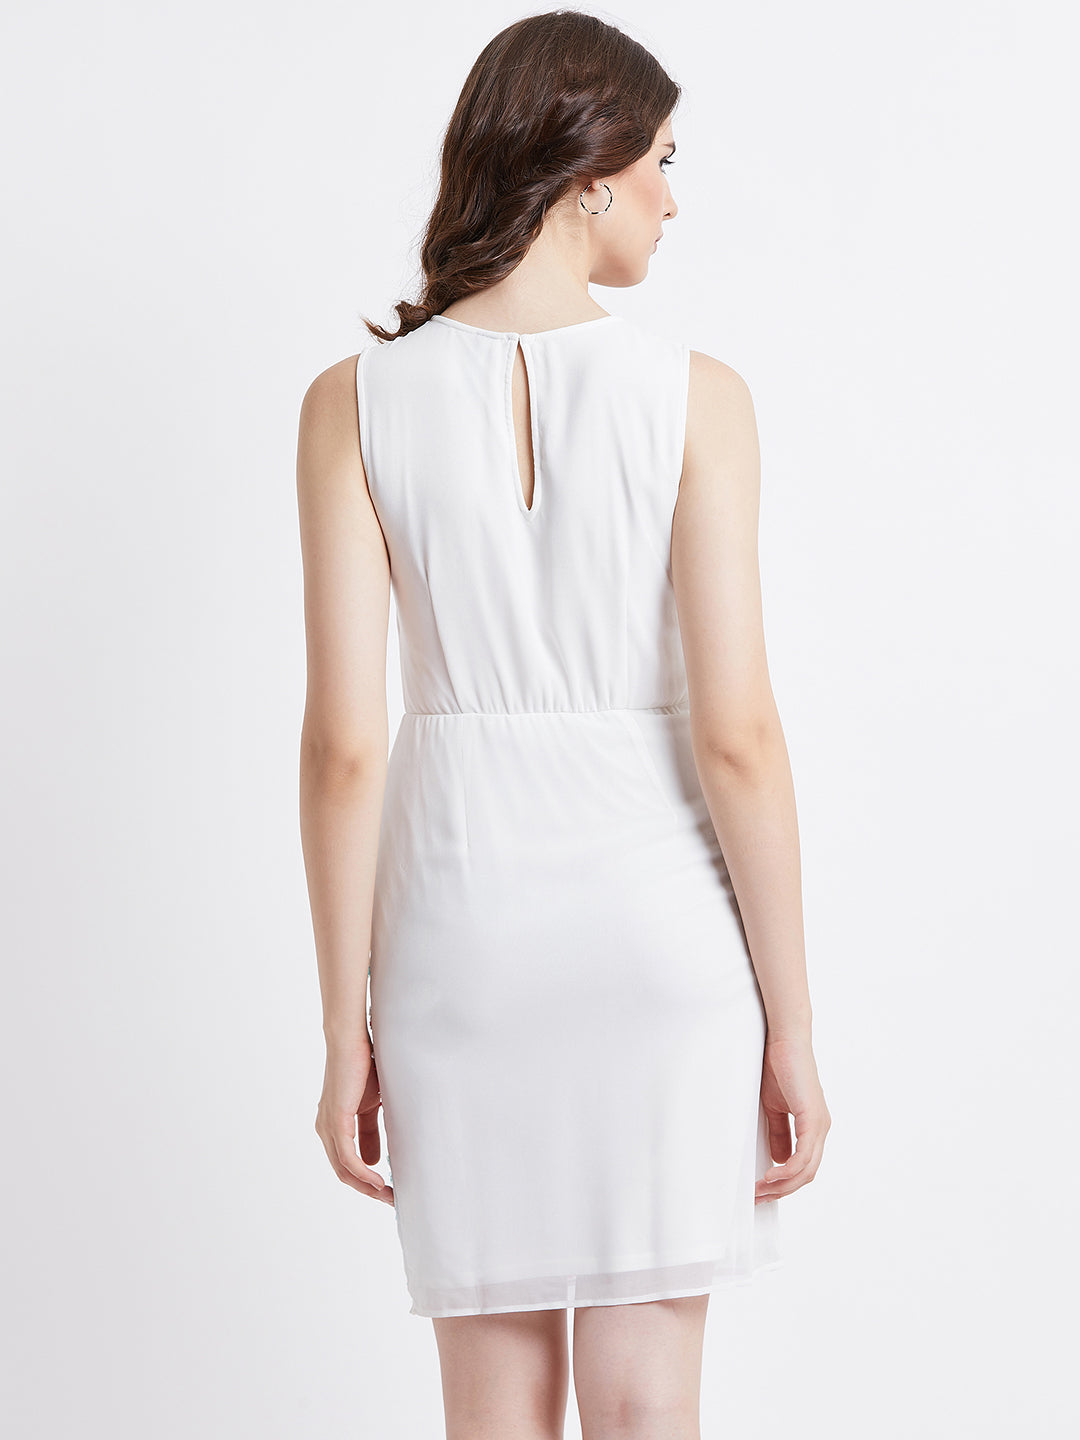 LY2 Polyester White Round Neck Sleeveless Bodycon Party Dress For Women